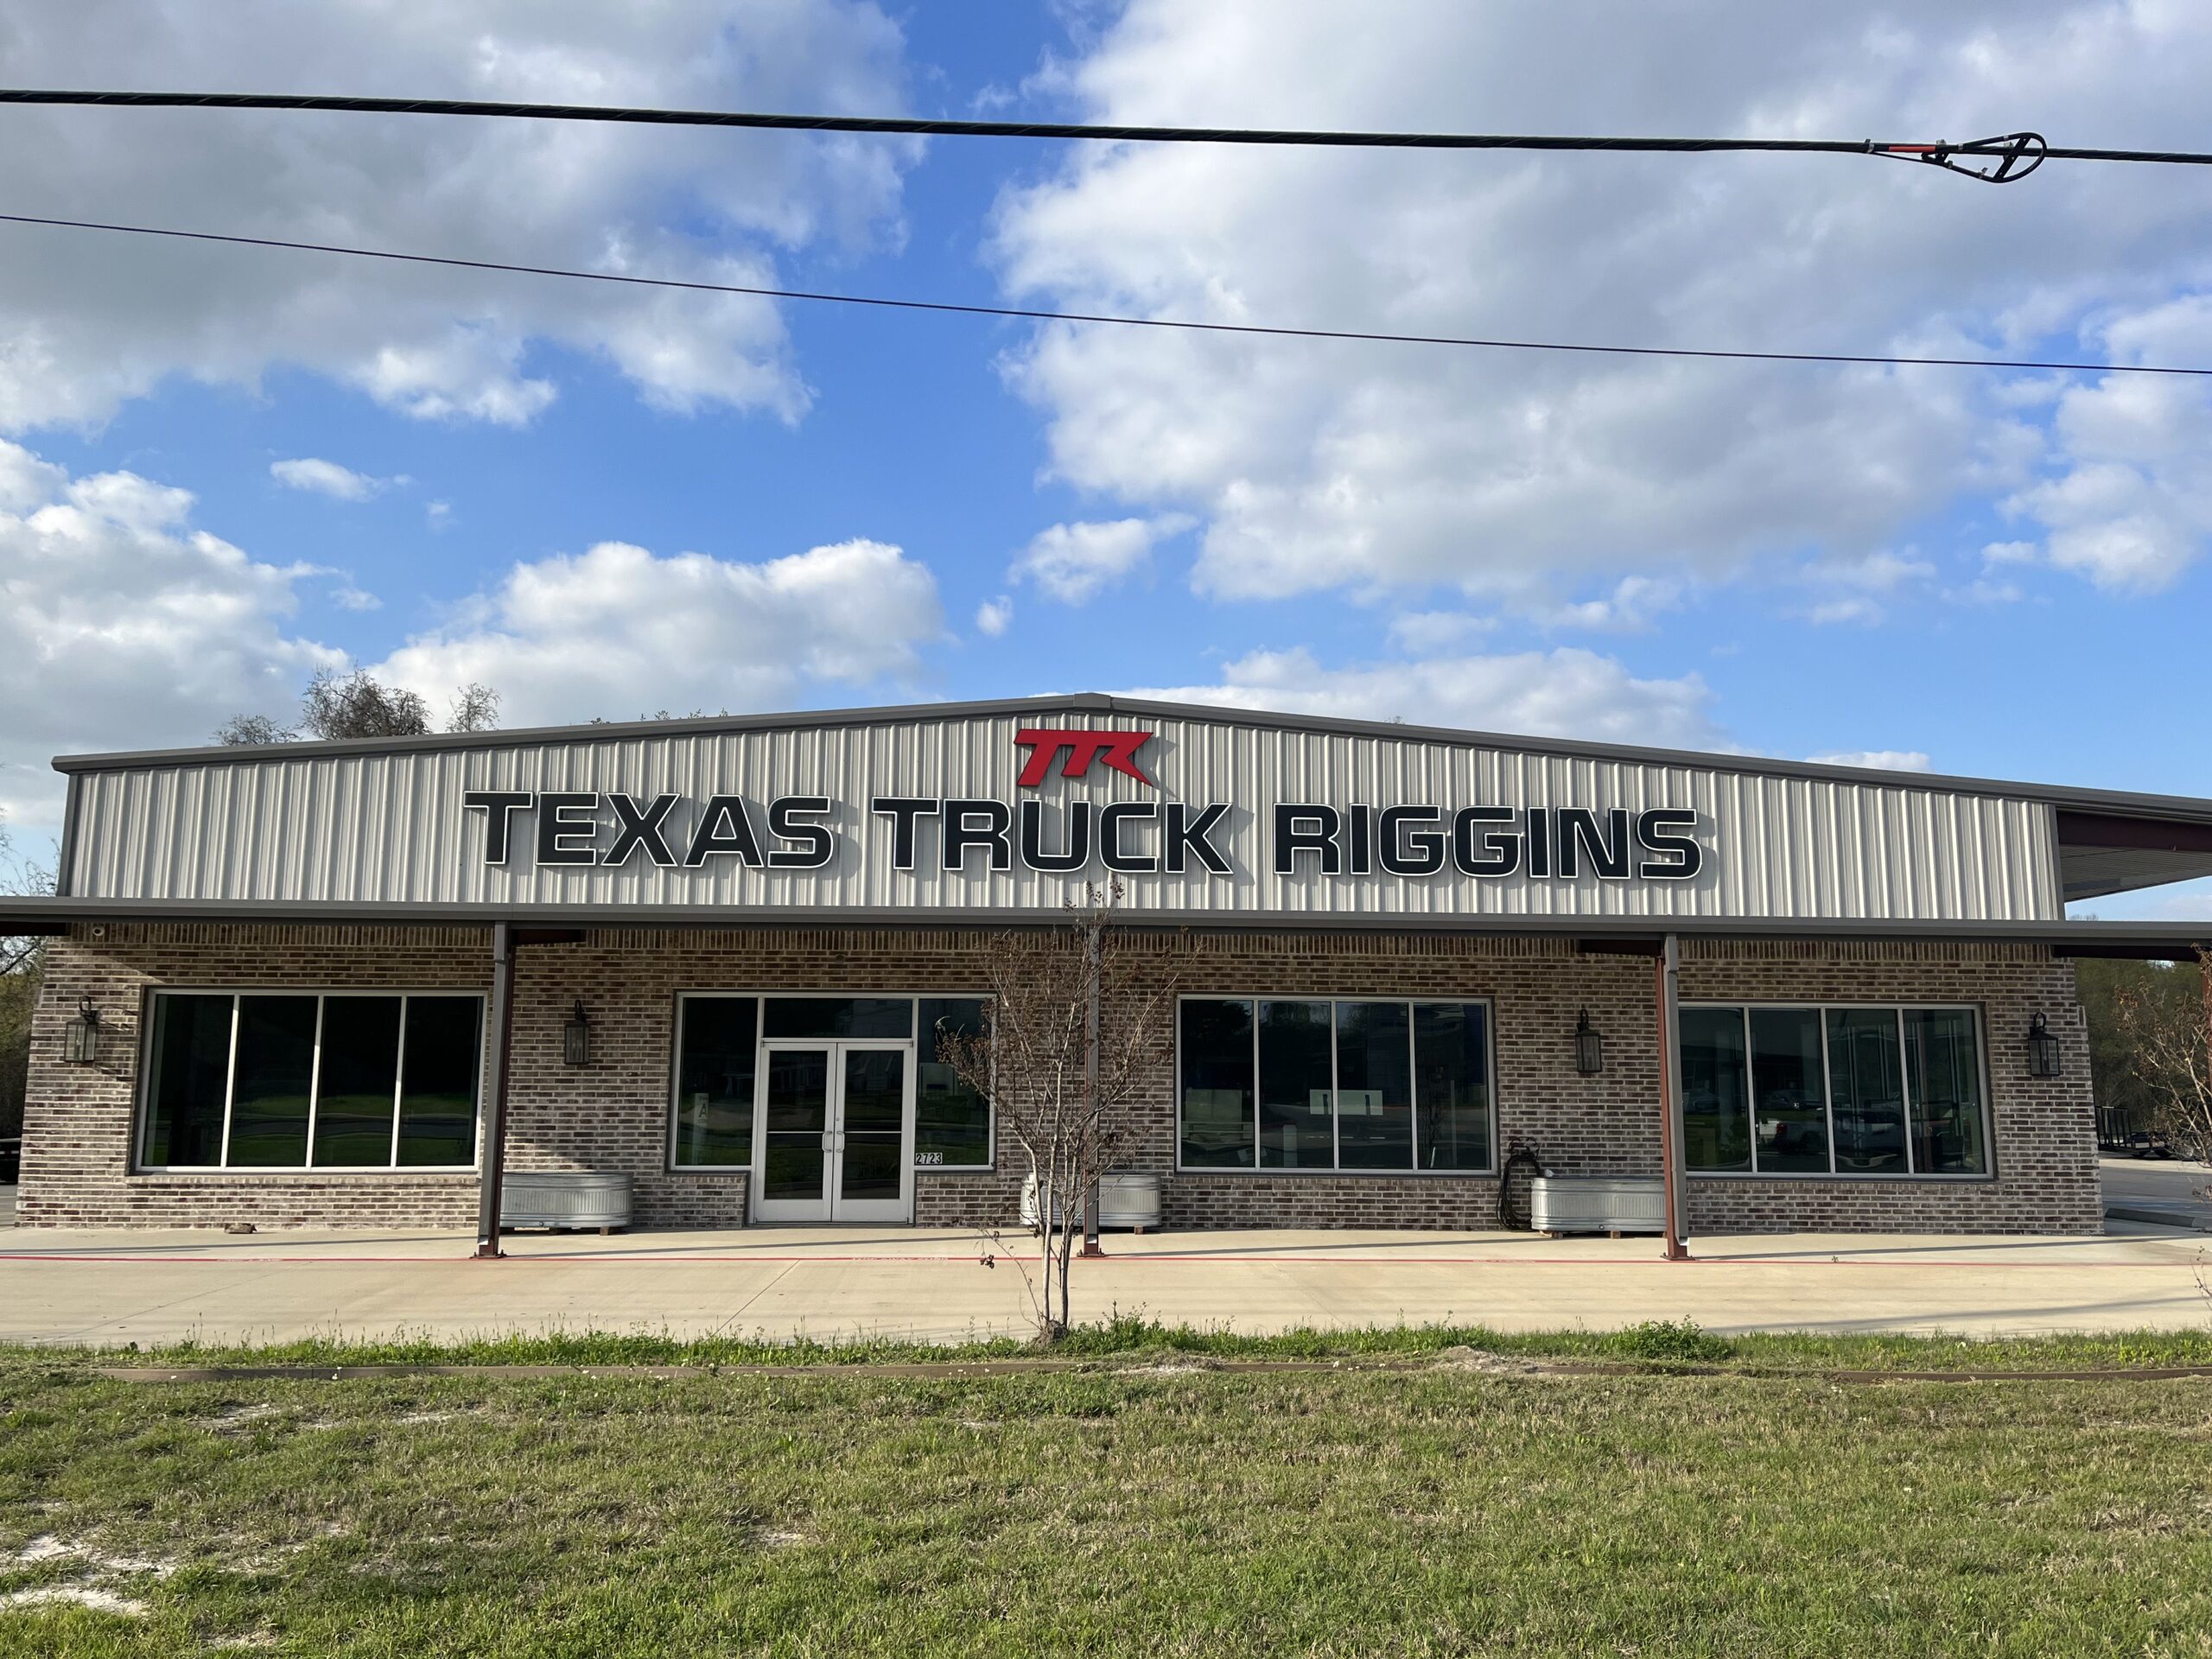 Texas Truck Riggins Building